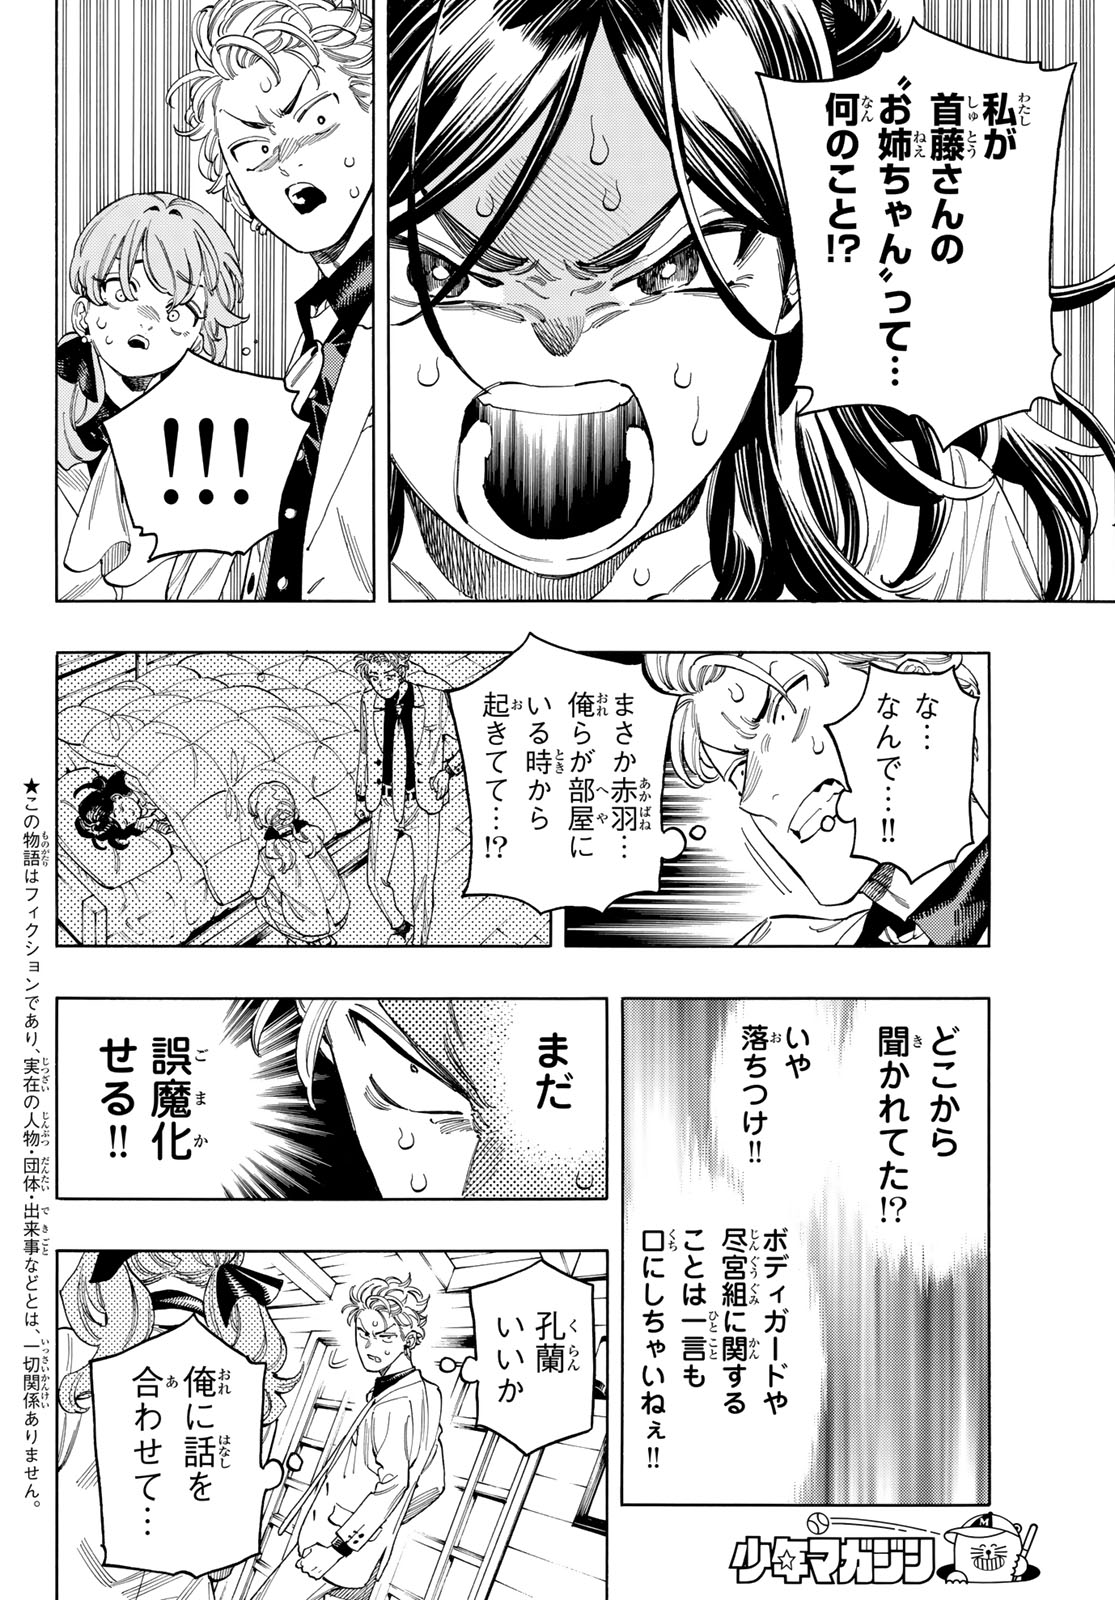 Akabane Honeko no Bodyguard - Chapter 88 - Page 2